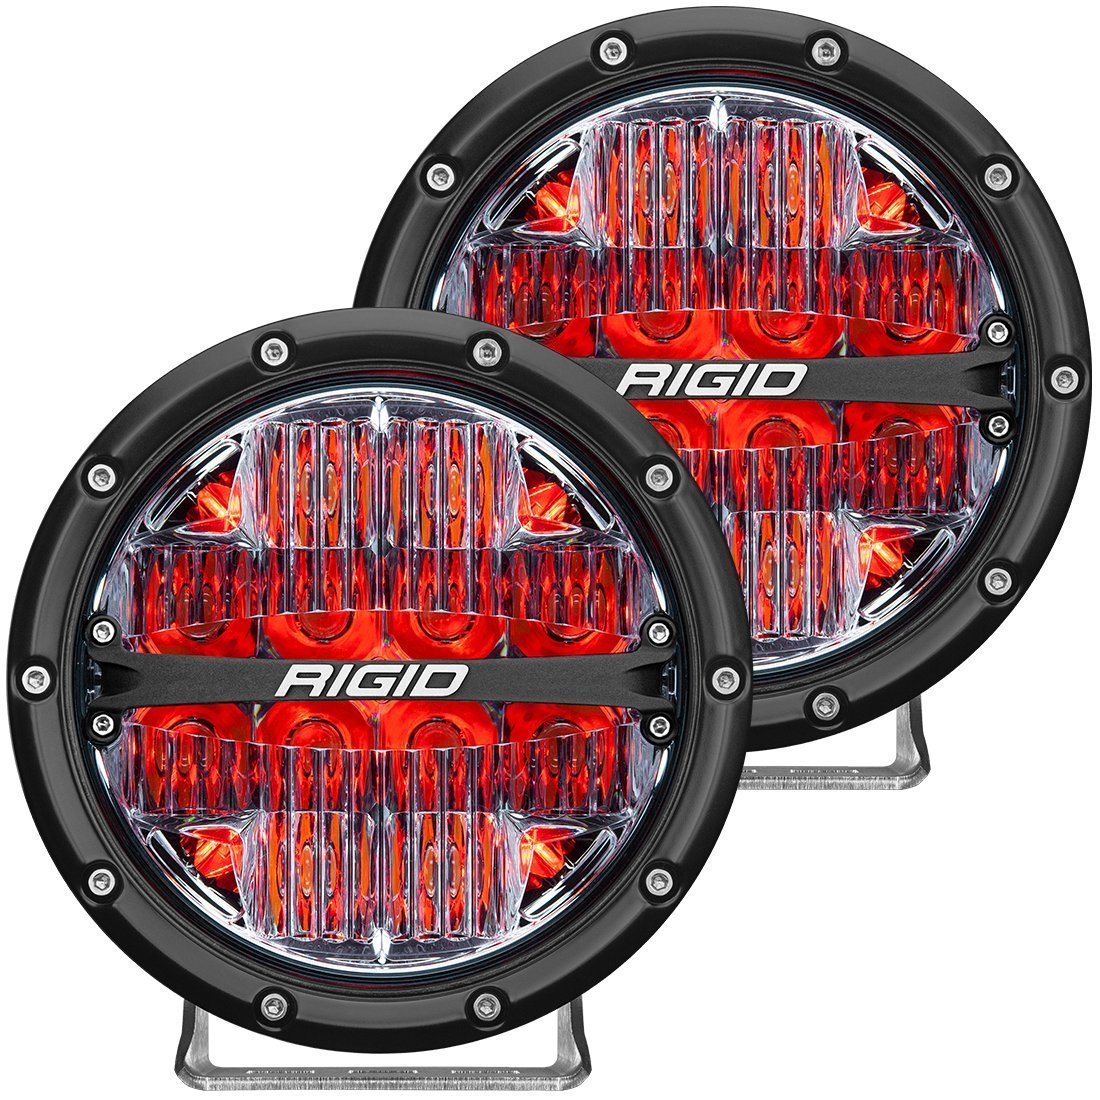 360 Series 6" LED OE Off-Road Fog Light Pair Lighting Rigid Industries Red Drive display